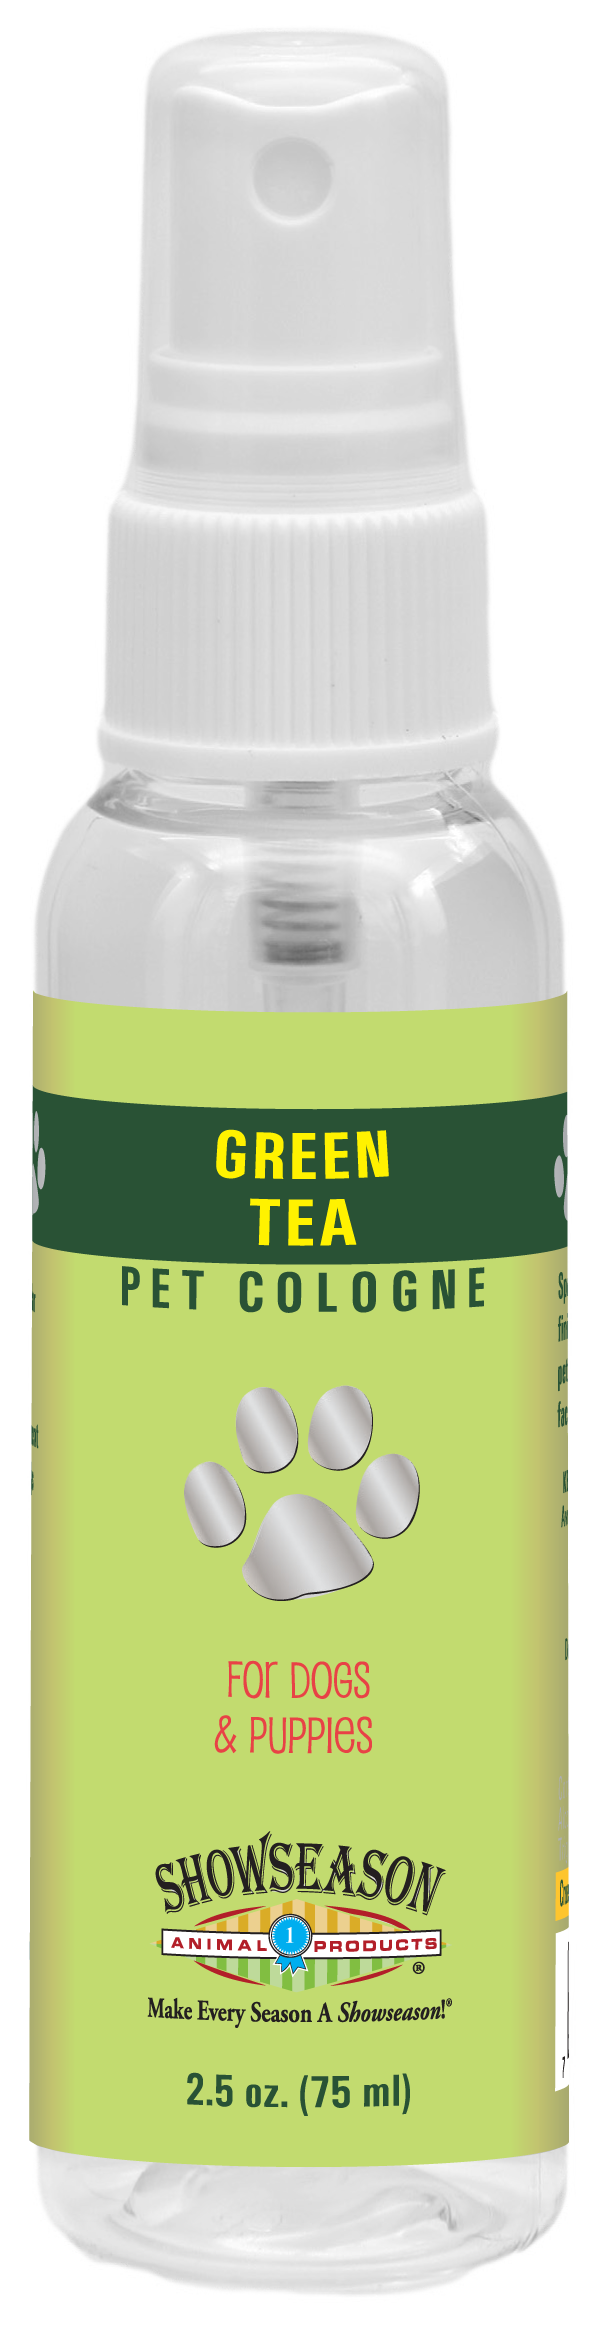 Green Tea Pet Cologne